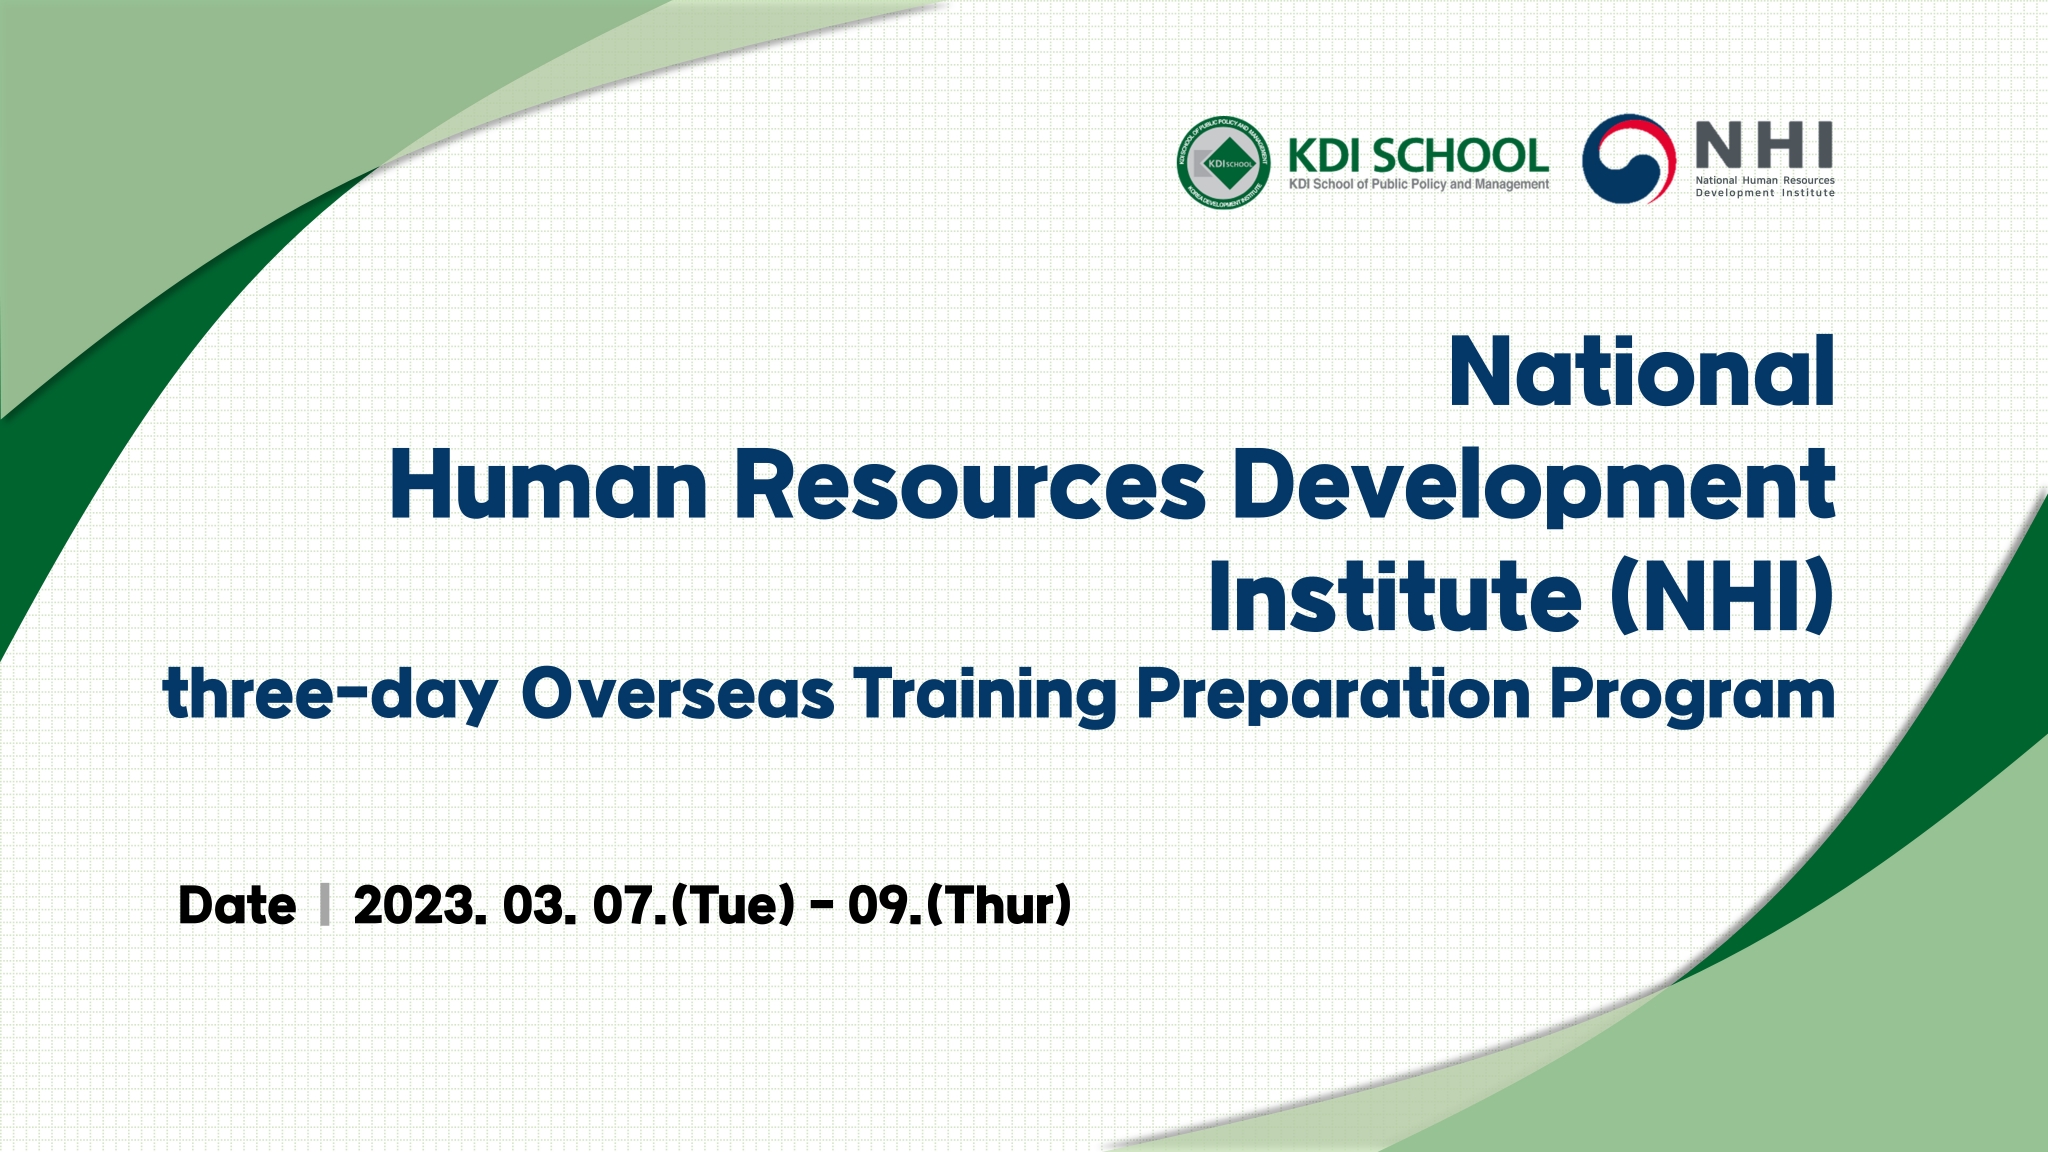 National Human Resources Development Institute's (NHI) three-day Overseas Training Preparation Program